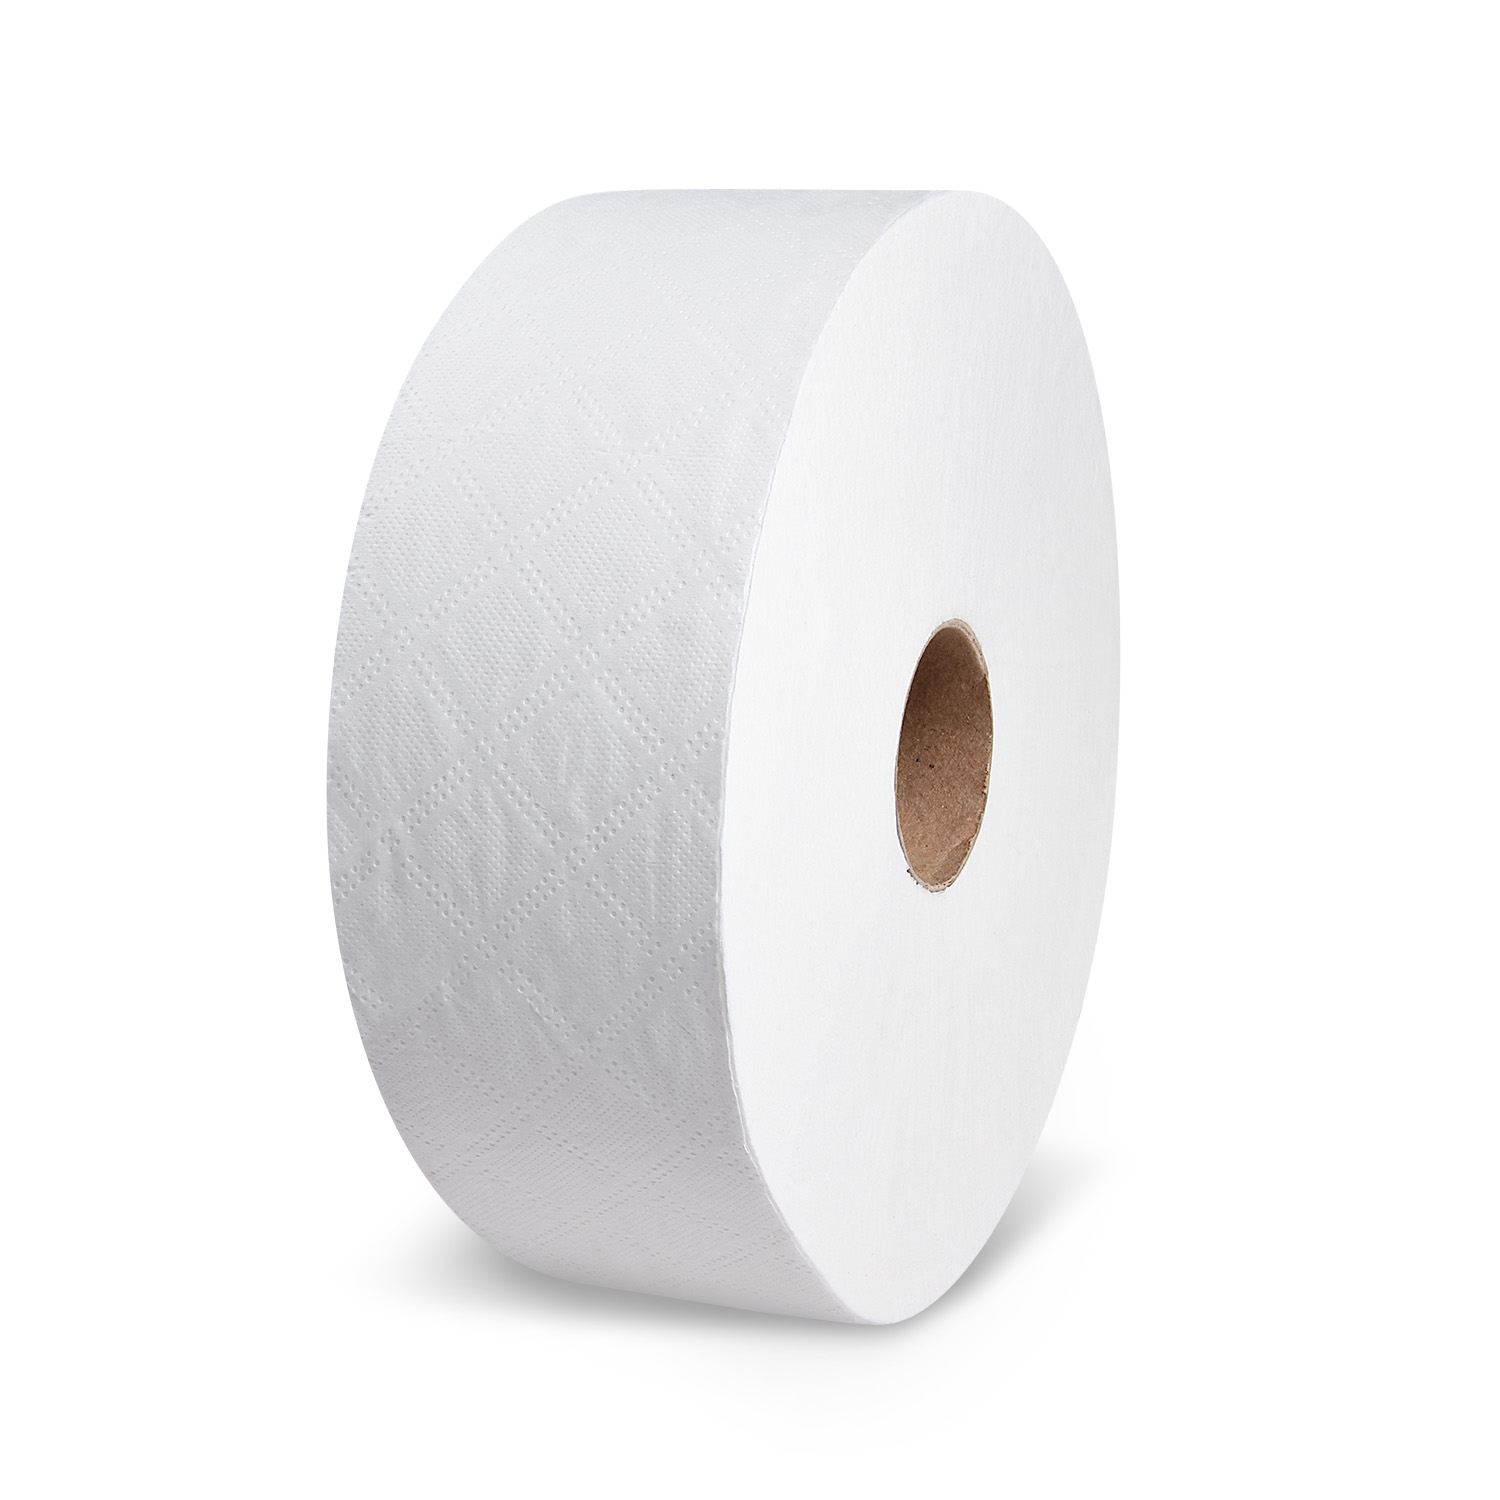 Jumbo-Toilettenpapier, 2-lagig, Ø 23cm, weiß, 6 Rollen/Packung